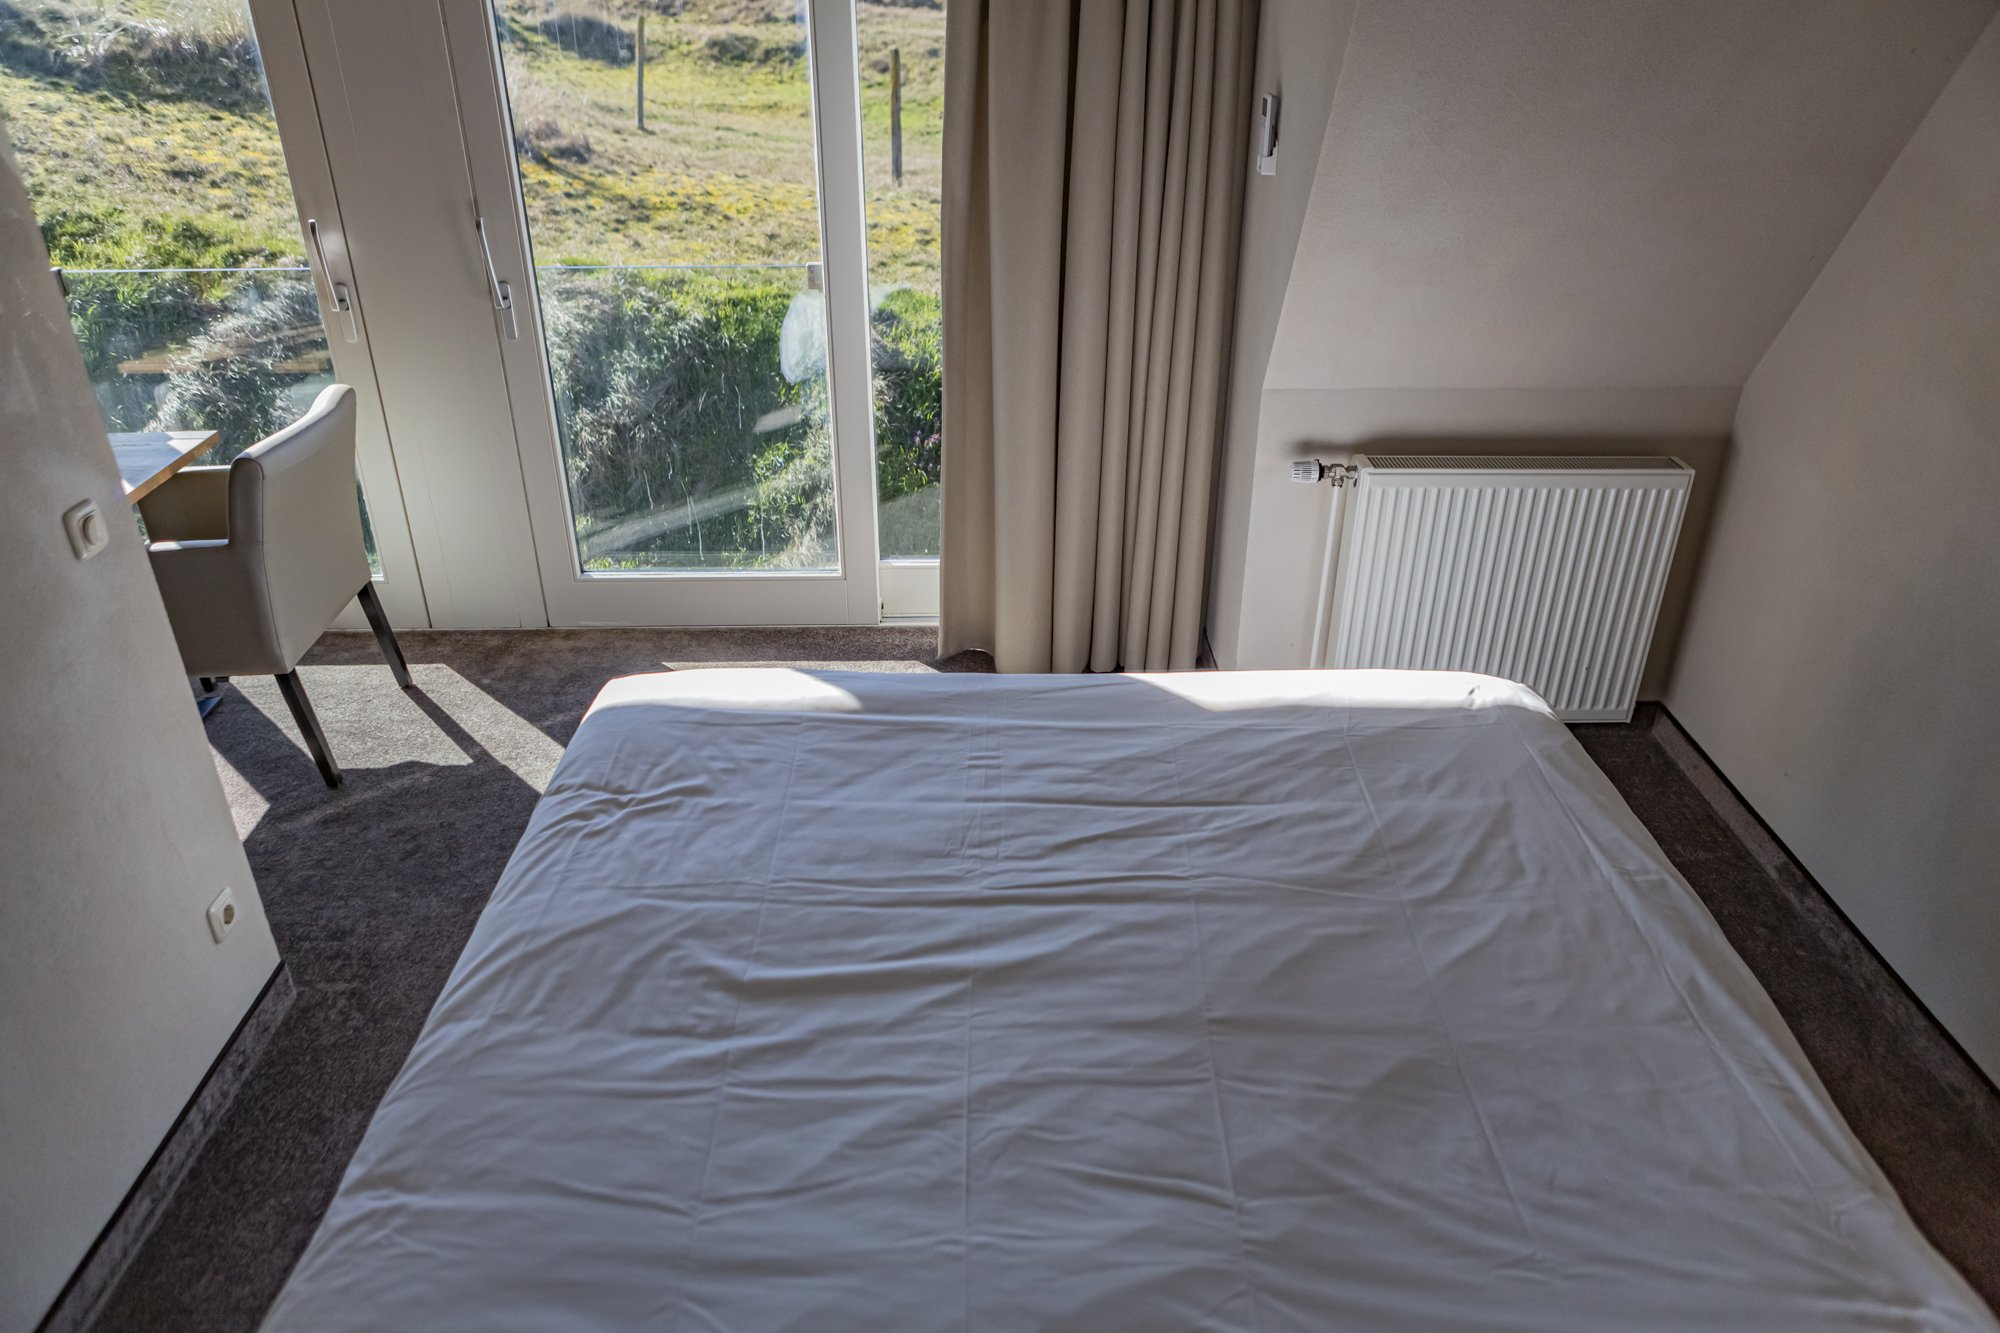 Strandhotel-camperduin-duinen-juniorsuite-bed7-w.jpg